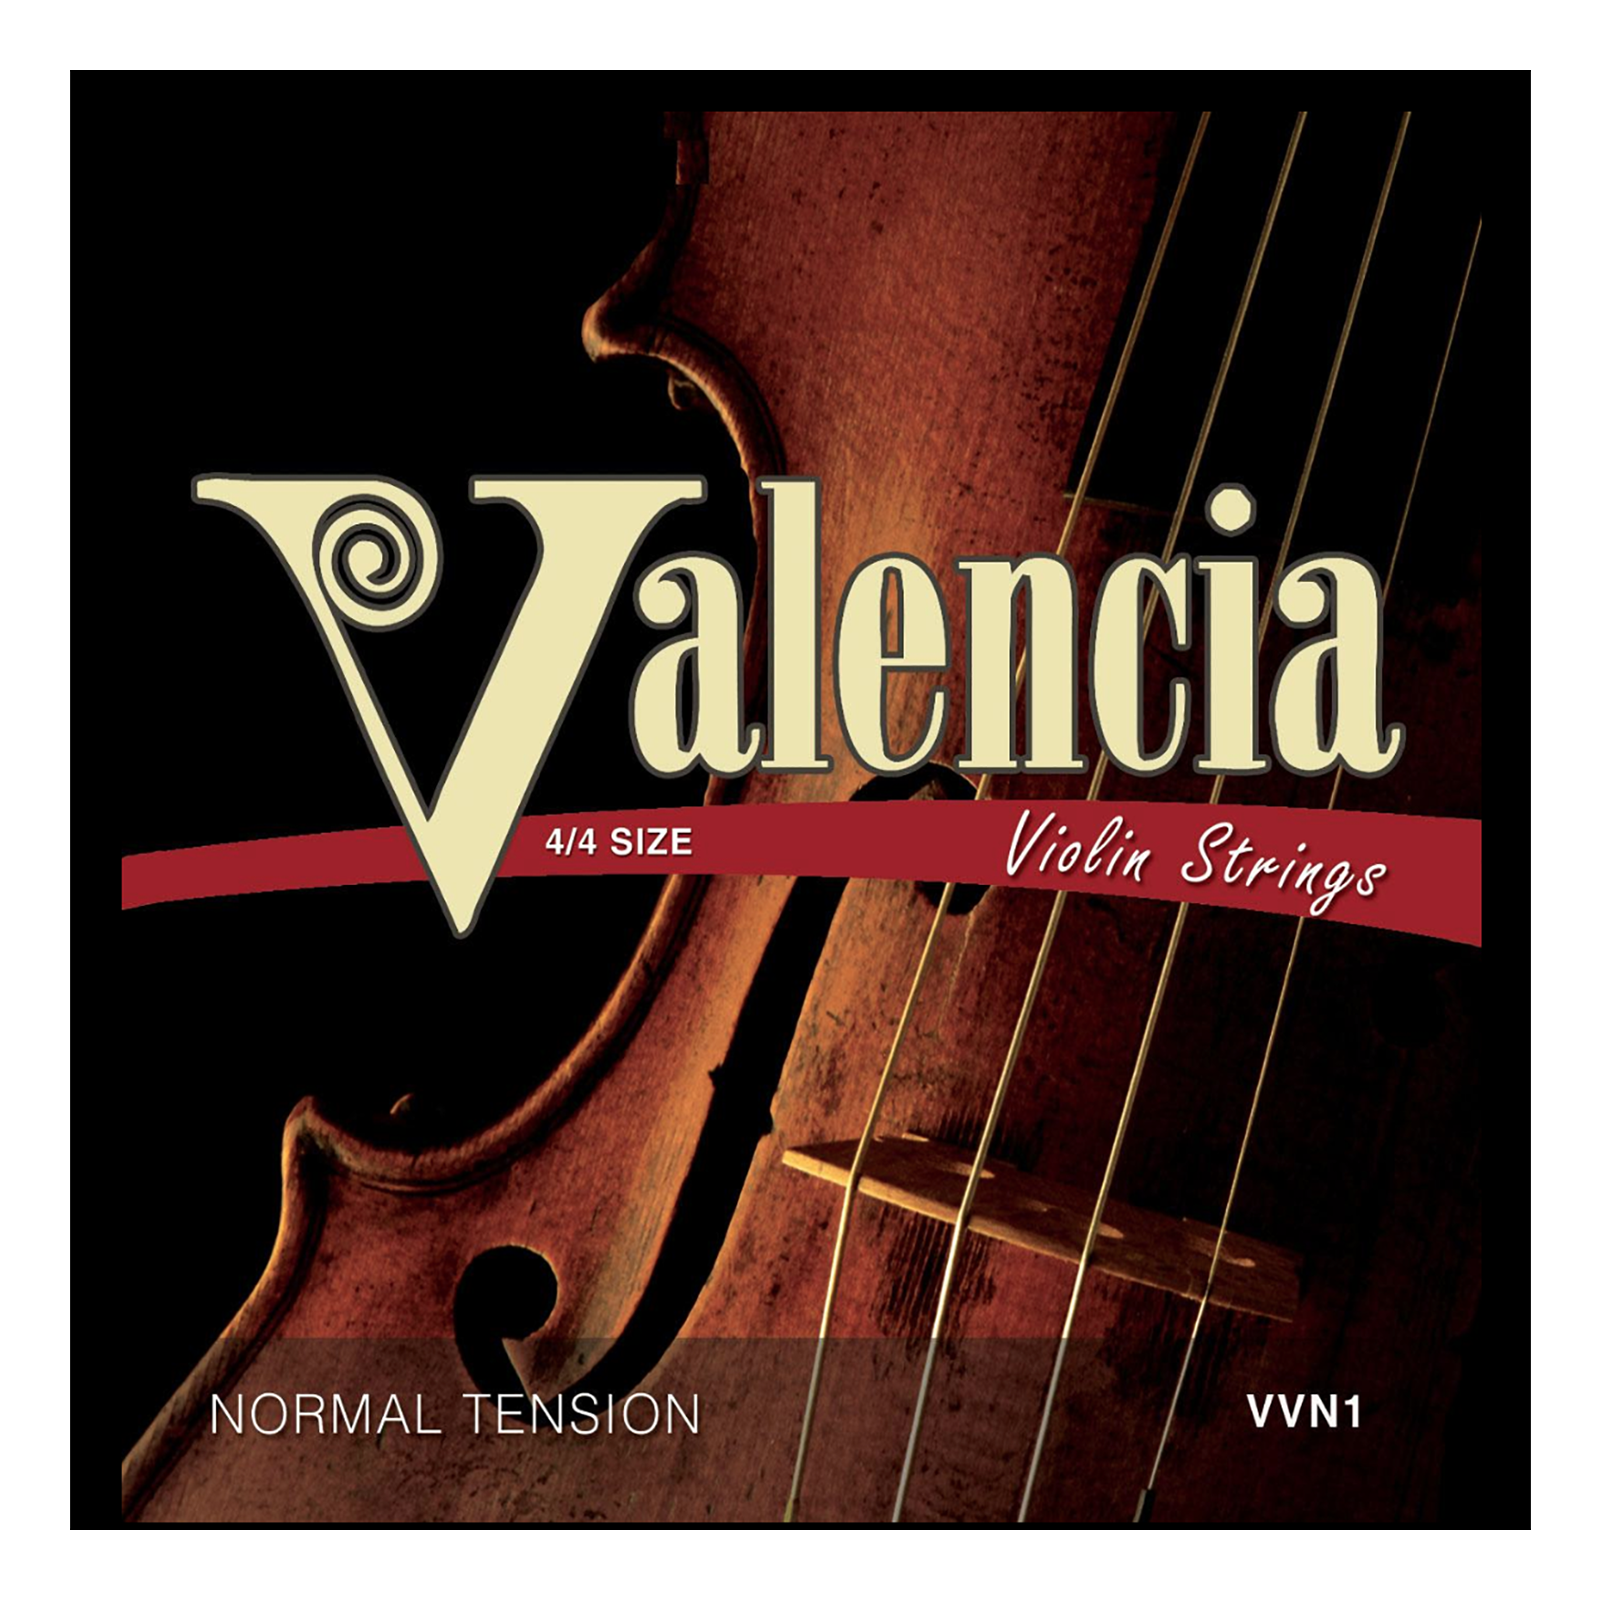 Valencia VVN1 Violin Strings 4/4 Size Normal Tension